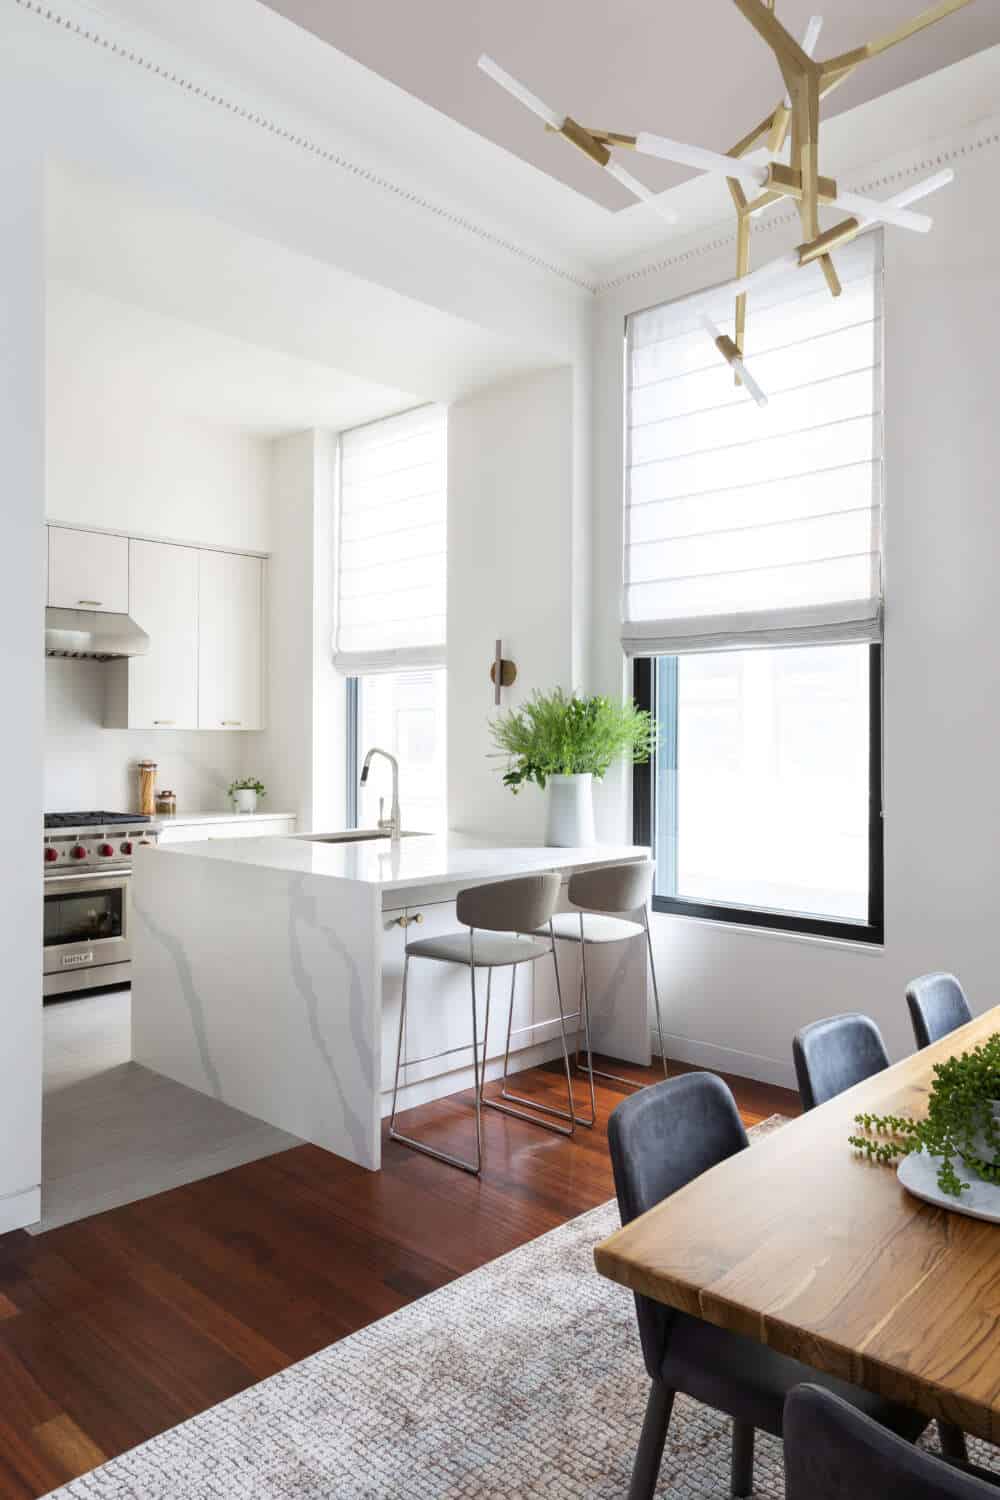 Tribeca loft kitchen features island with waterfall Silestone countertop and Bilotta frameless Copenhagen cabinetry.